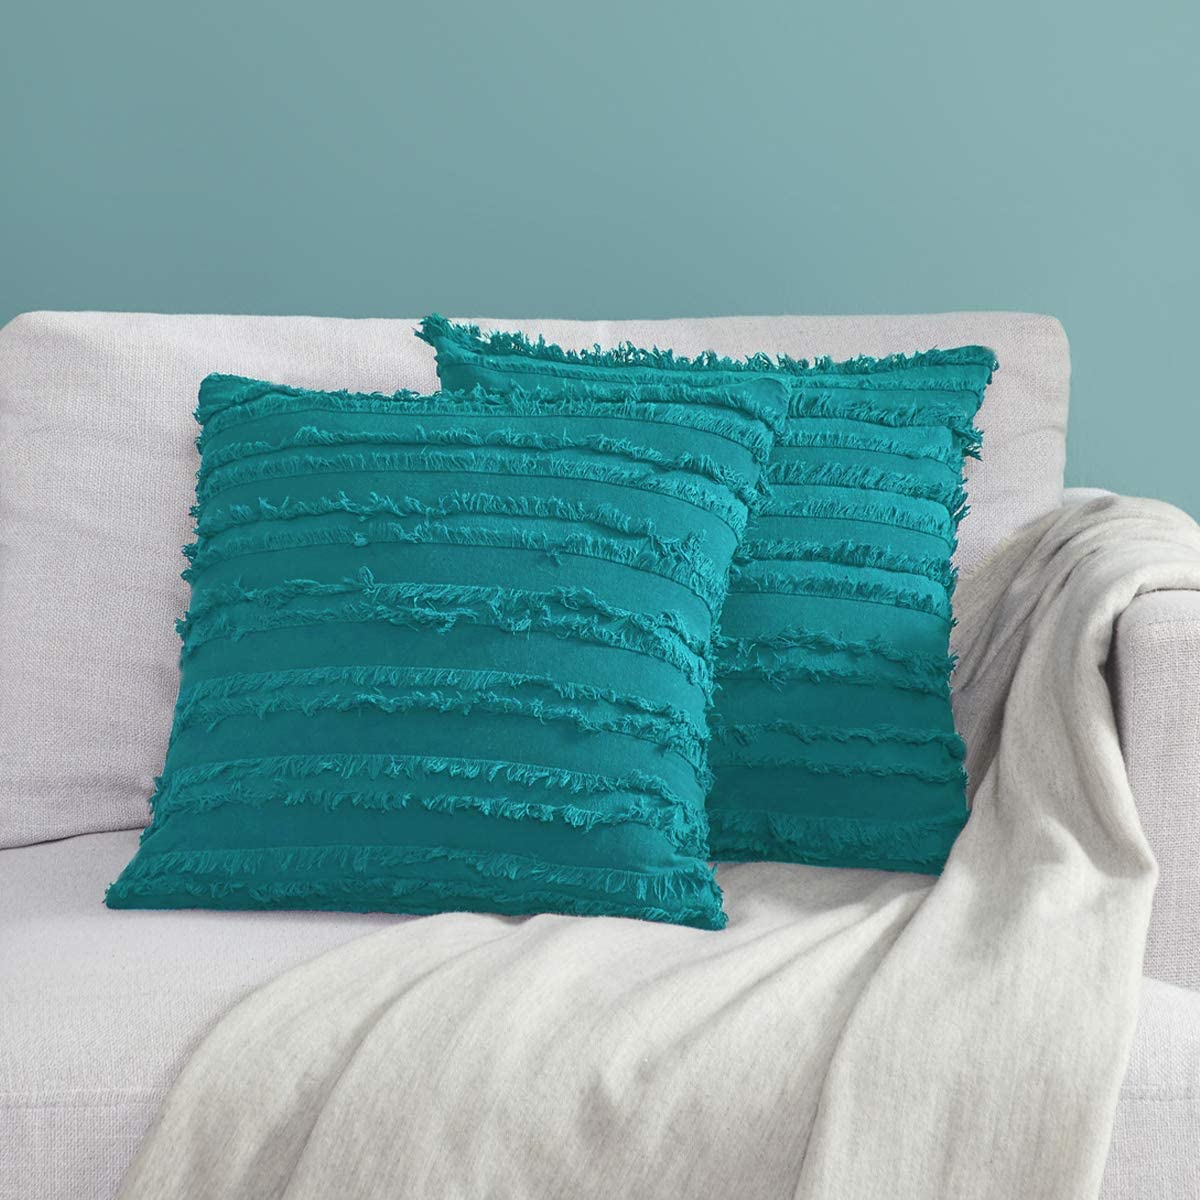 GIGIZAZA Decor Throw Couch Pillow Covers,18x18 Linen White Sofa  Pillows,Square Sofa Cushion Covers (White, 18x18inch-2pcs)